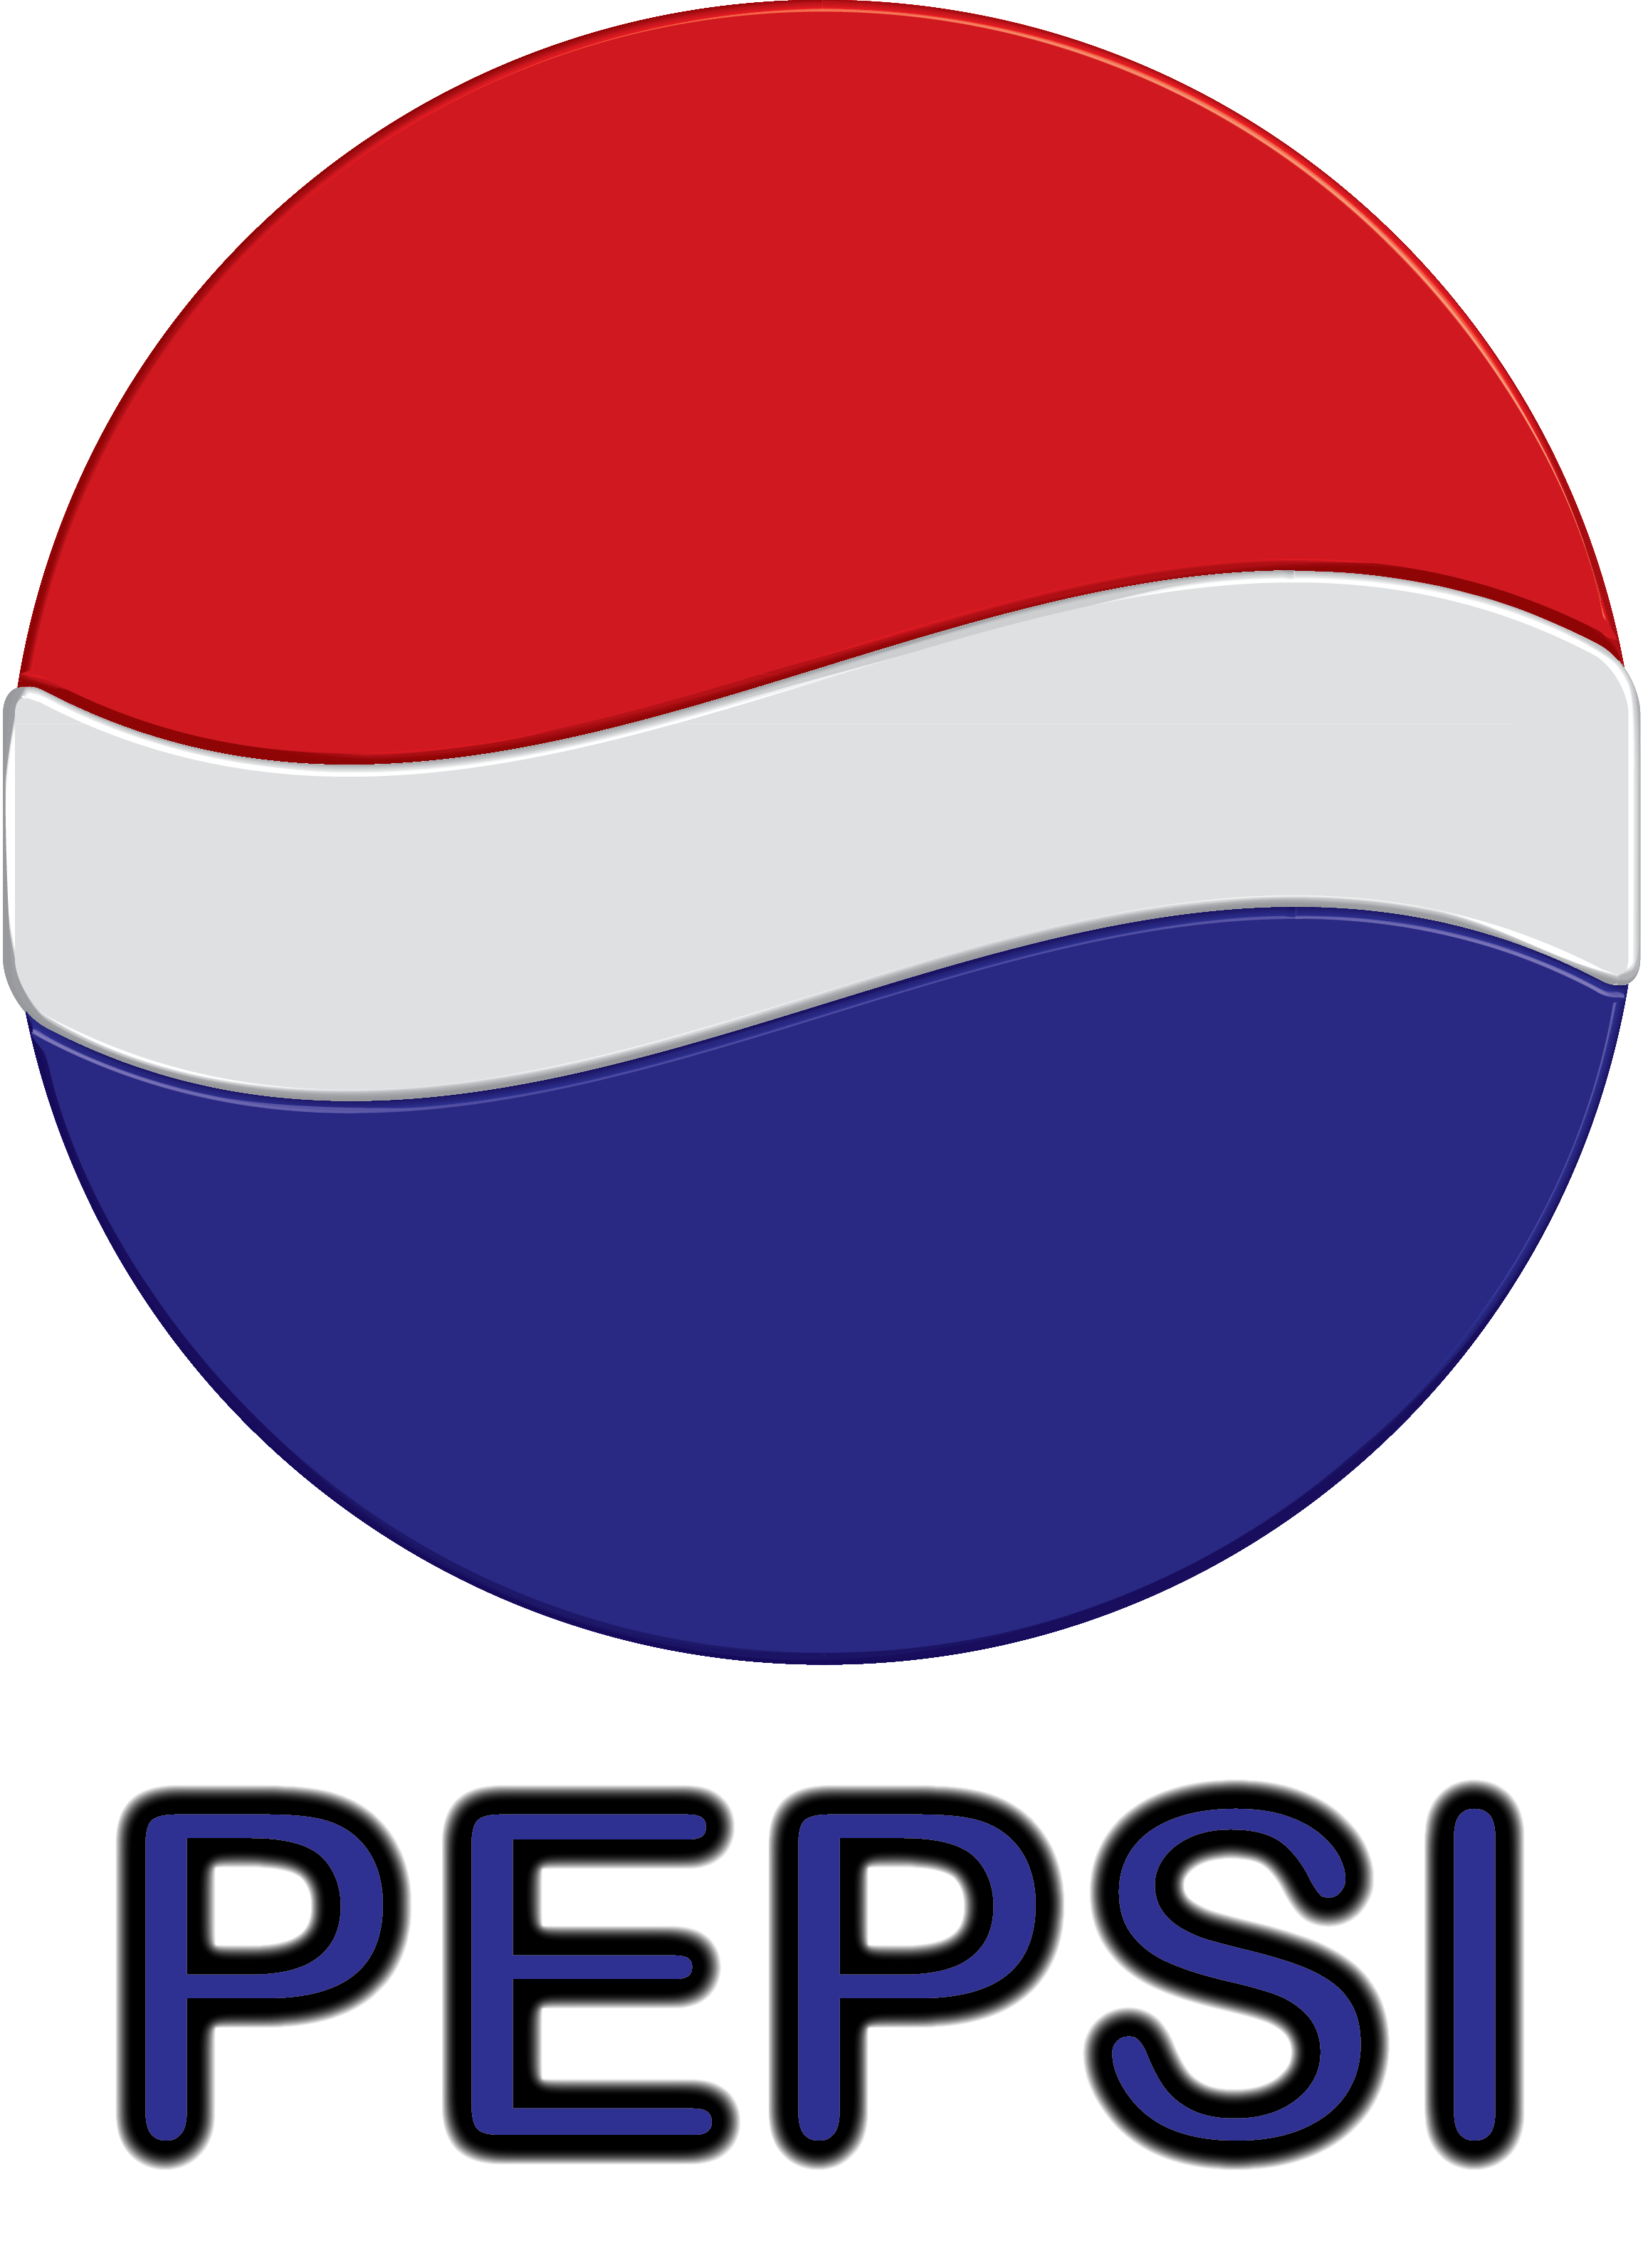 Pepsi Logo - Pepsi Logo | Logo designs | Pinterest | Pepsi, Pepsi logo and Pepsi cola